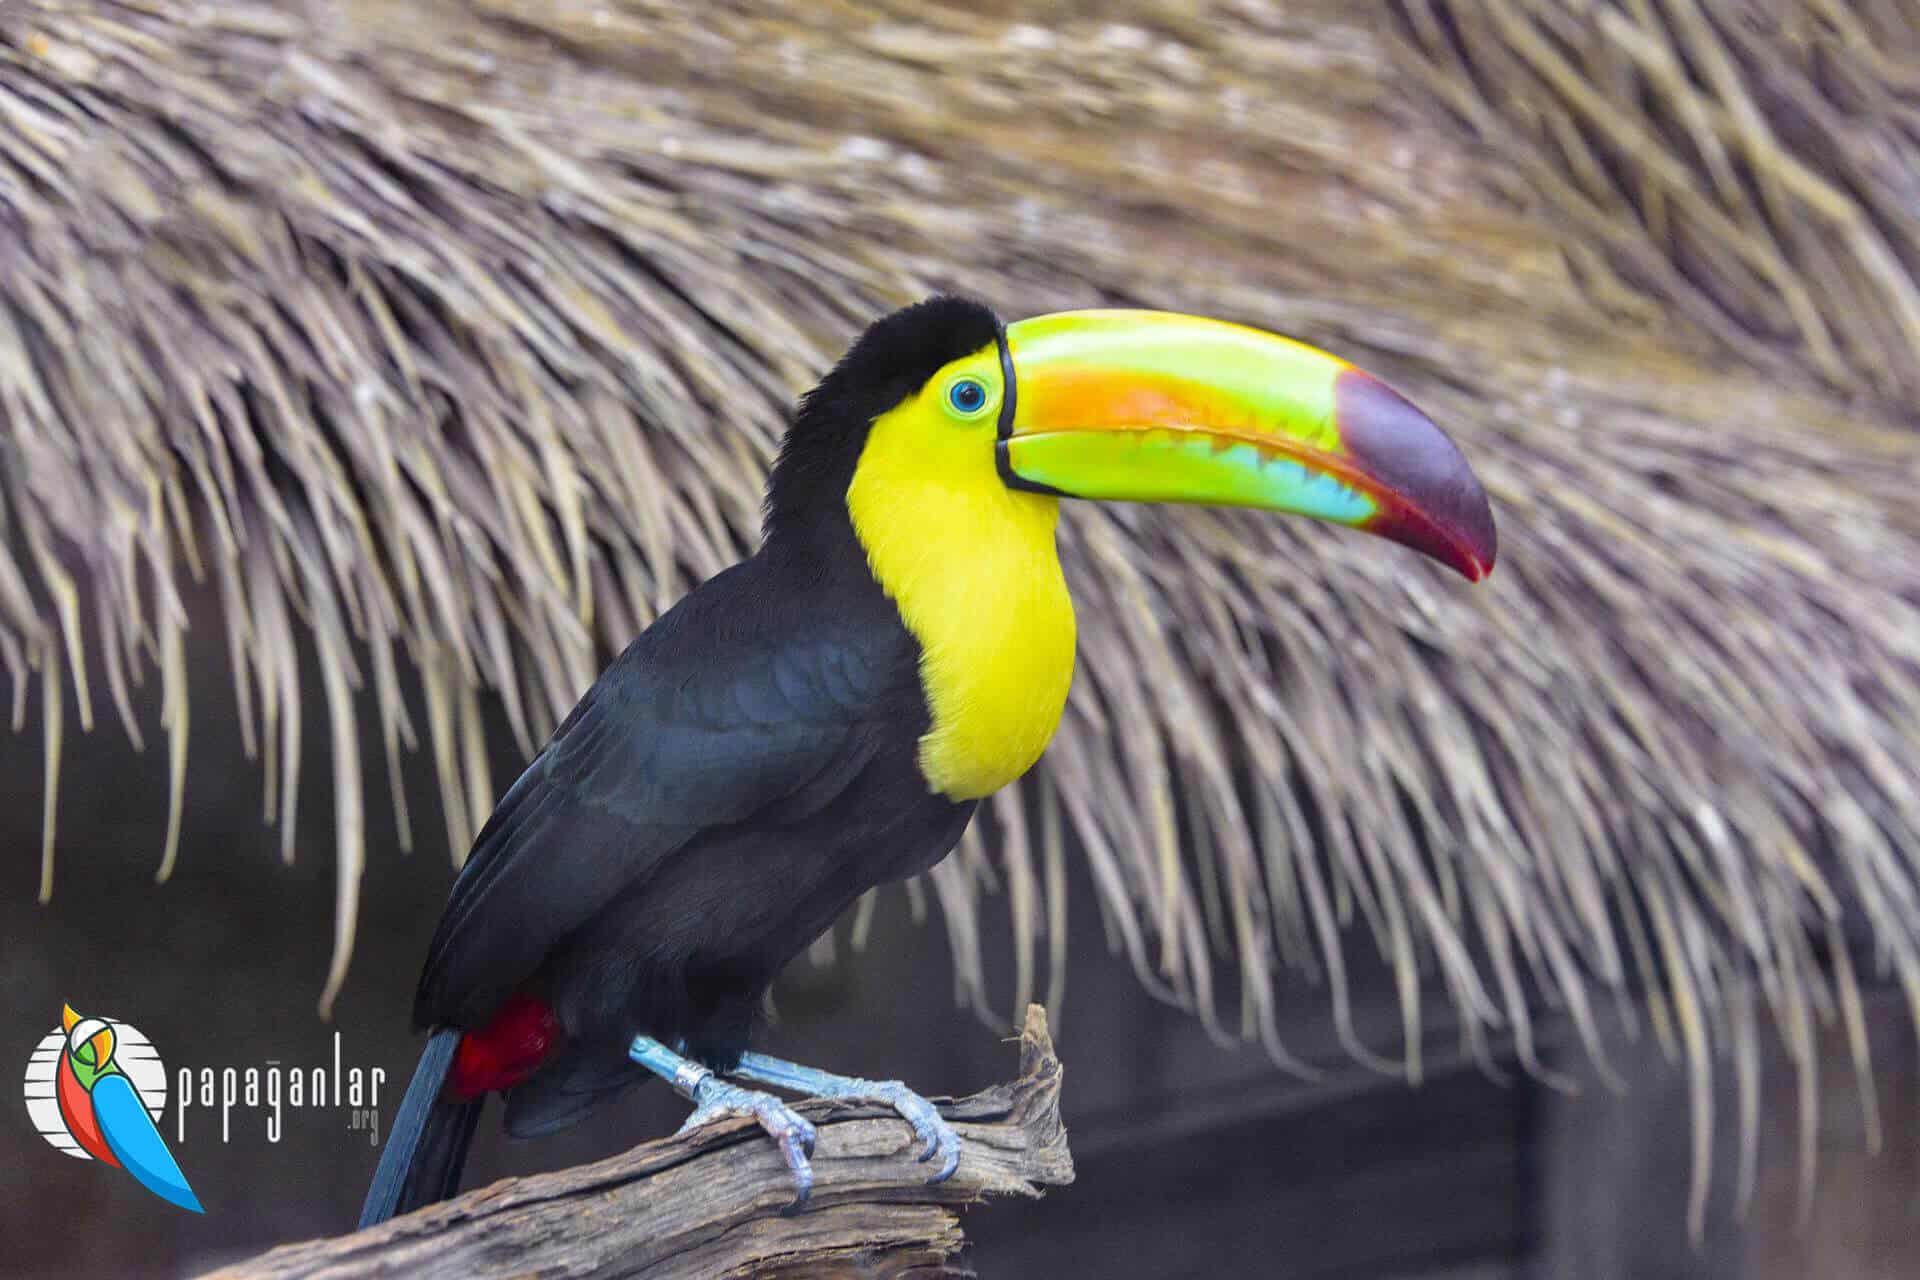 Physical characteristics of the toucan bird